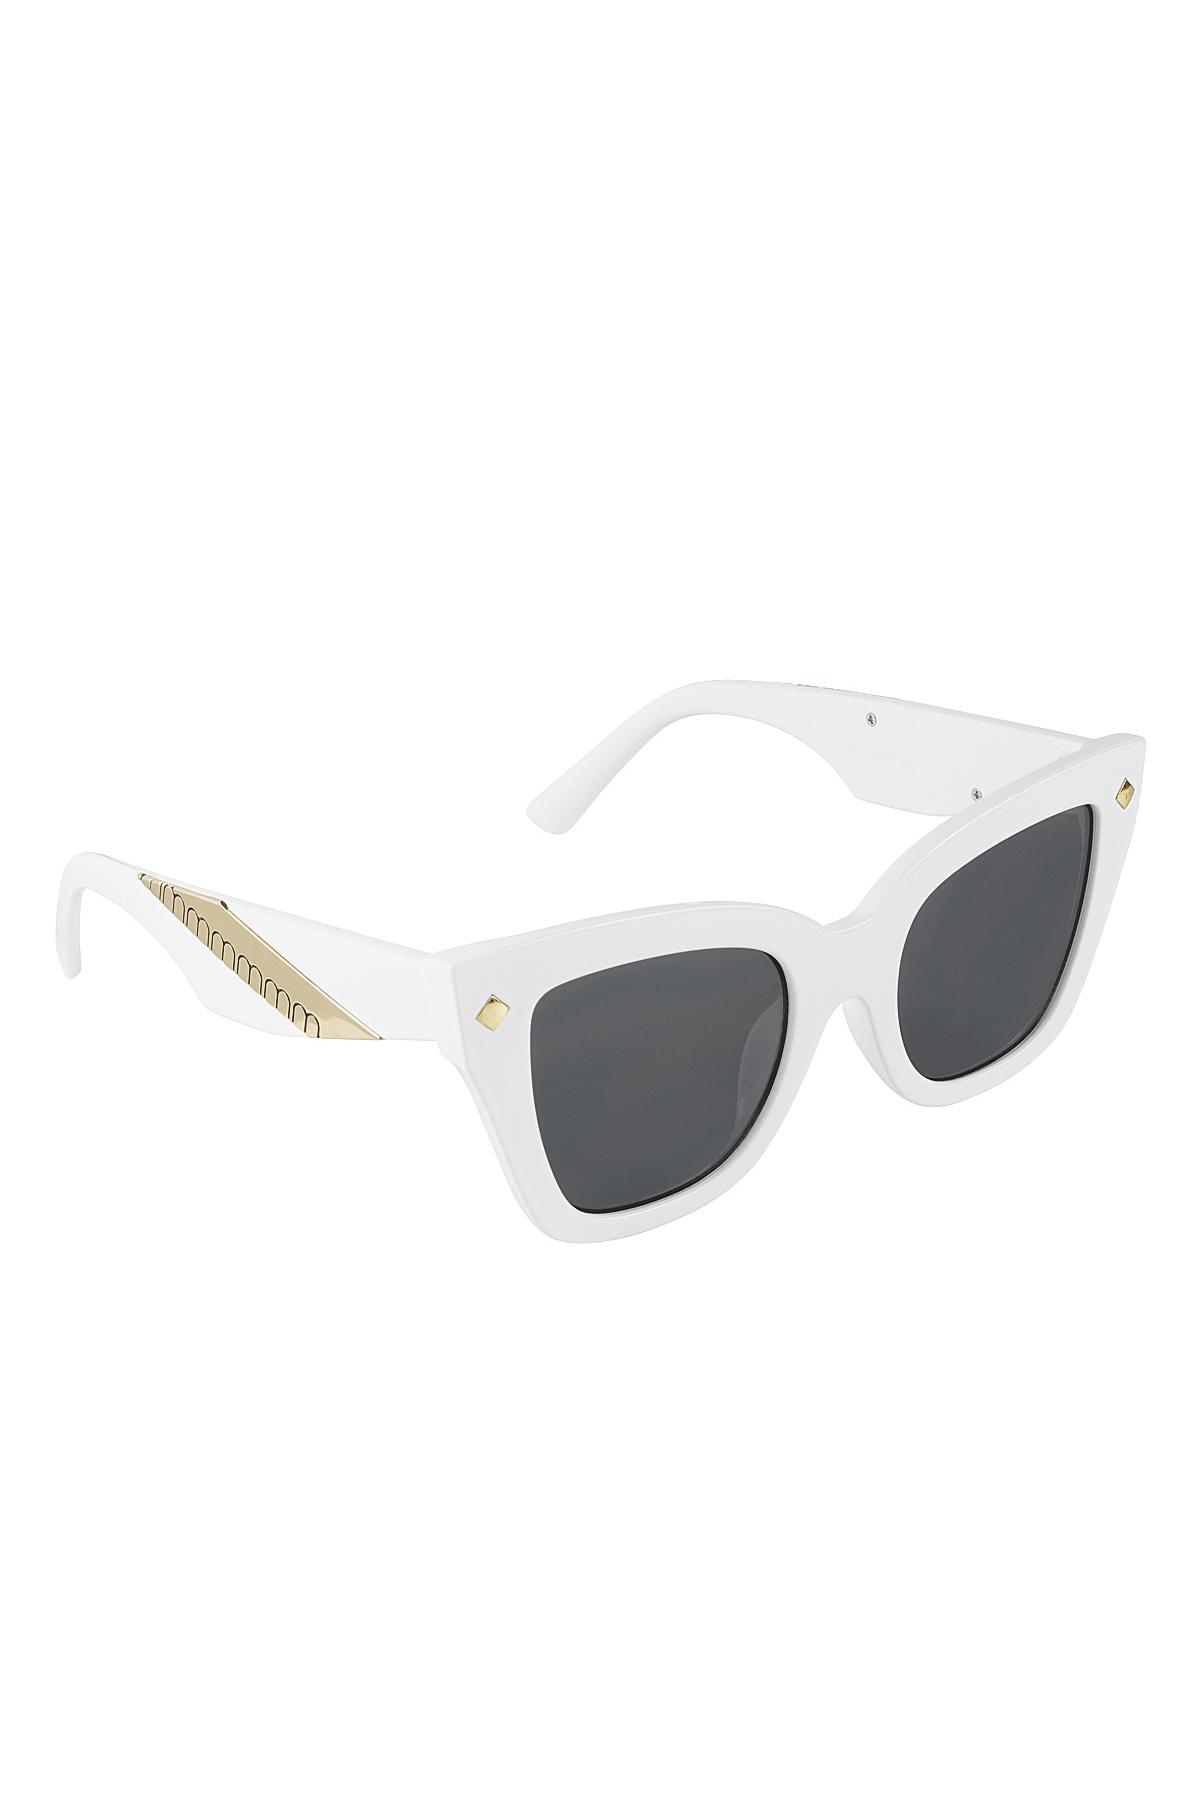 Sonnenbrille basic/gold Weiß PC One size